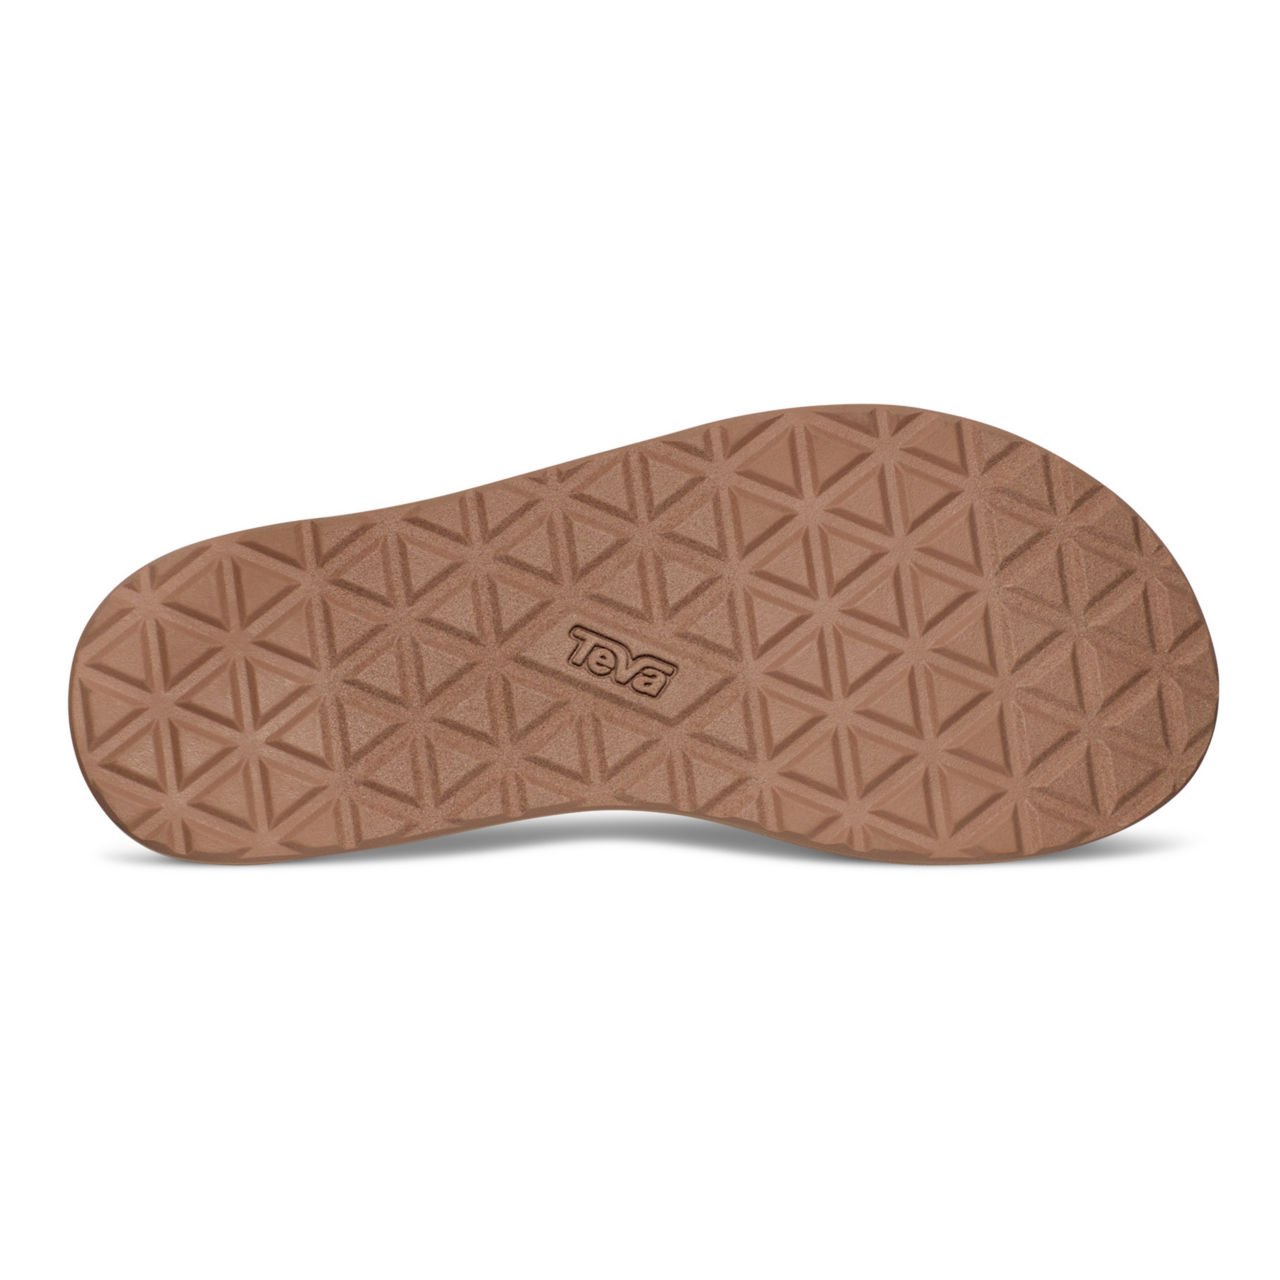 Women’s Teva® Original Universal Sandals - BEACH FLORAL PEACH BLOOM image number 5